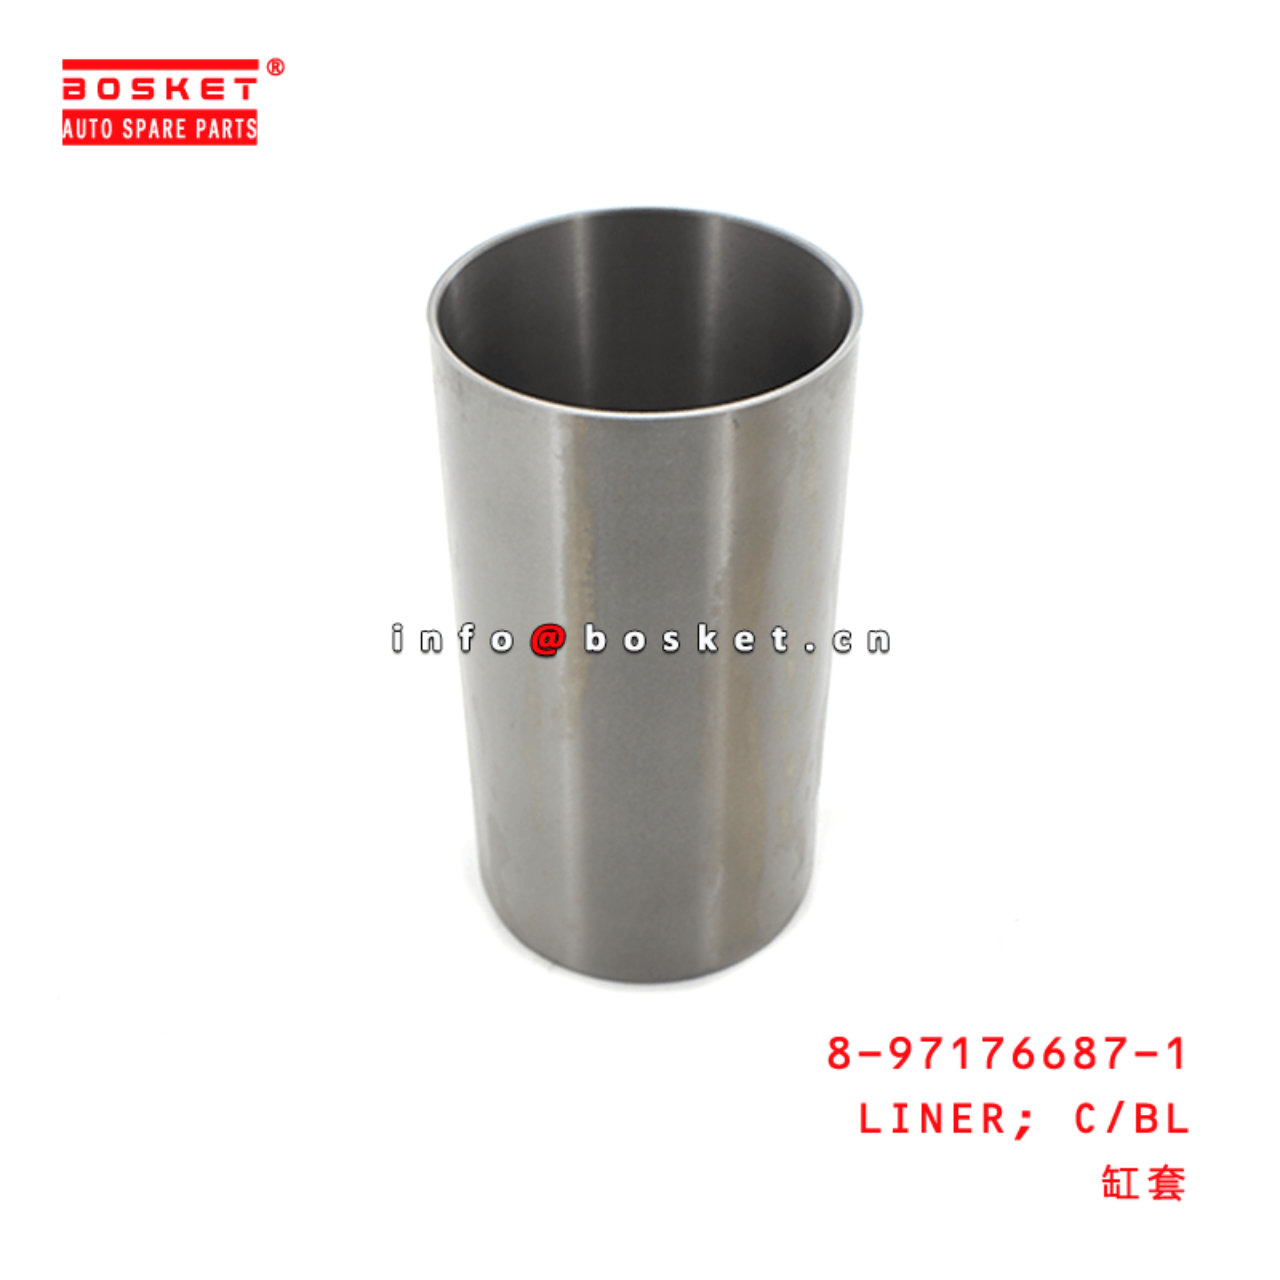 8-97176687-1 Cylinder Block Liner 8971766871 Suitable for ISUZU NHR 4JB1T 